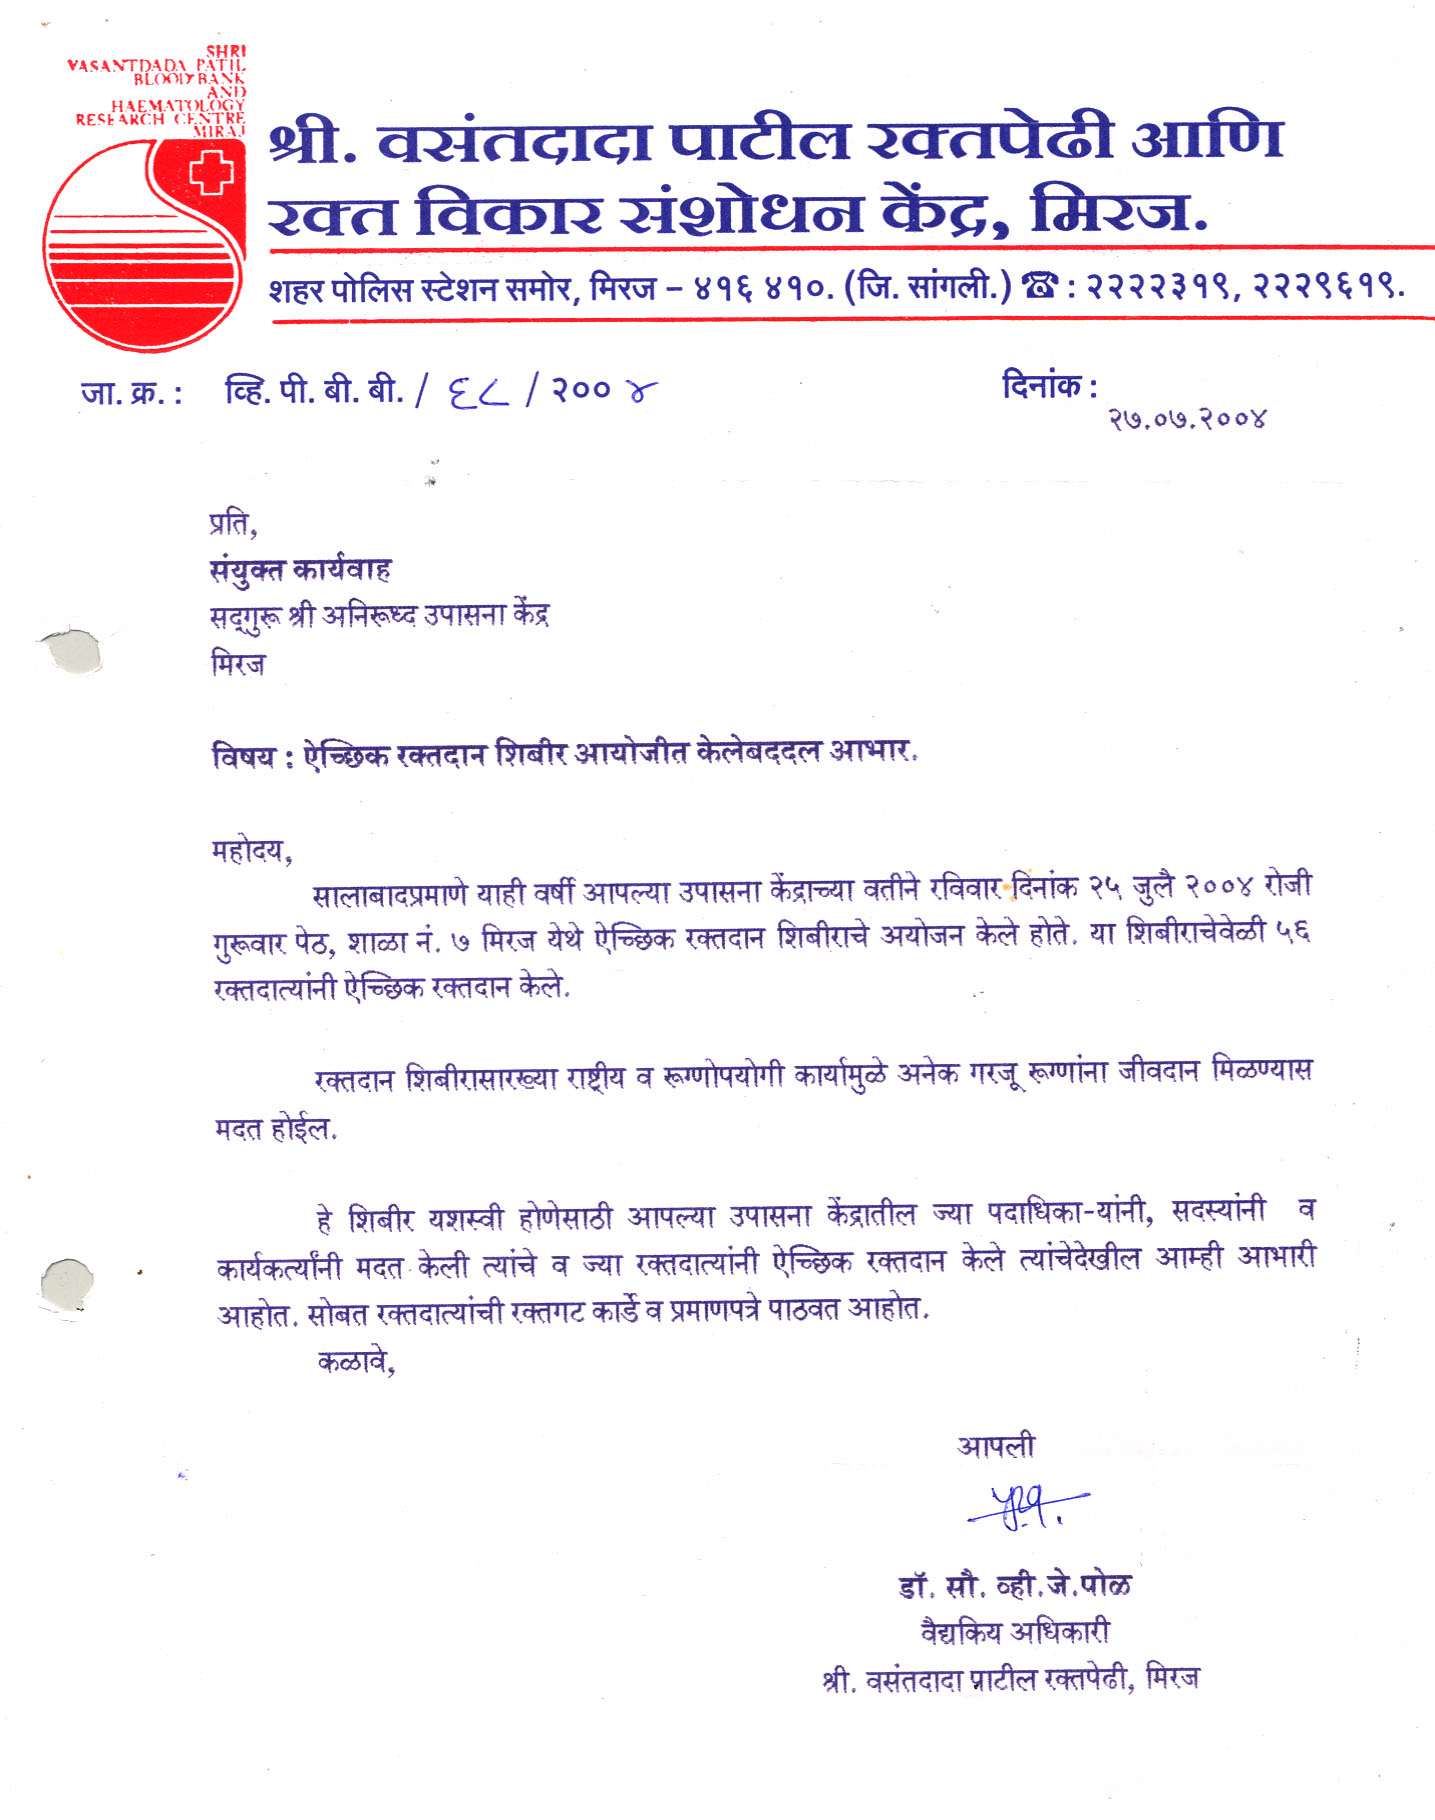 Appreciation-Letter from Vasantdada Patil Blood Bank 2004-for-Aniruddhafoundation-Compassion-Social-services